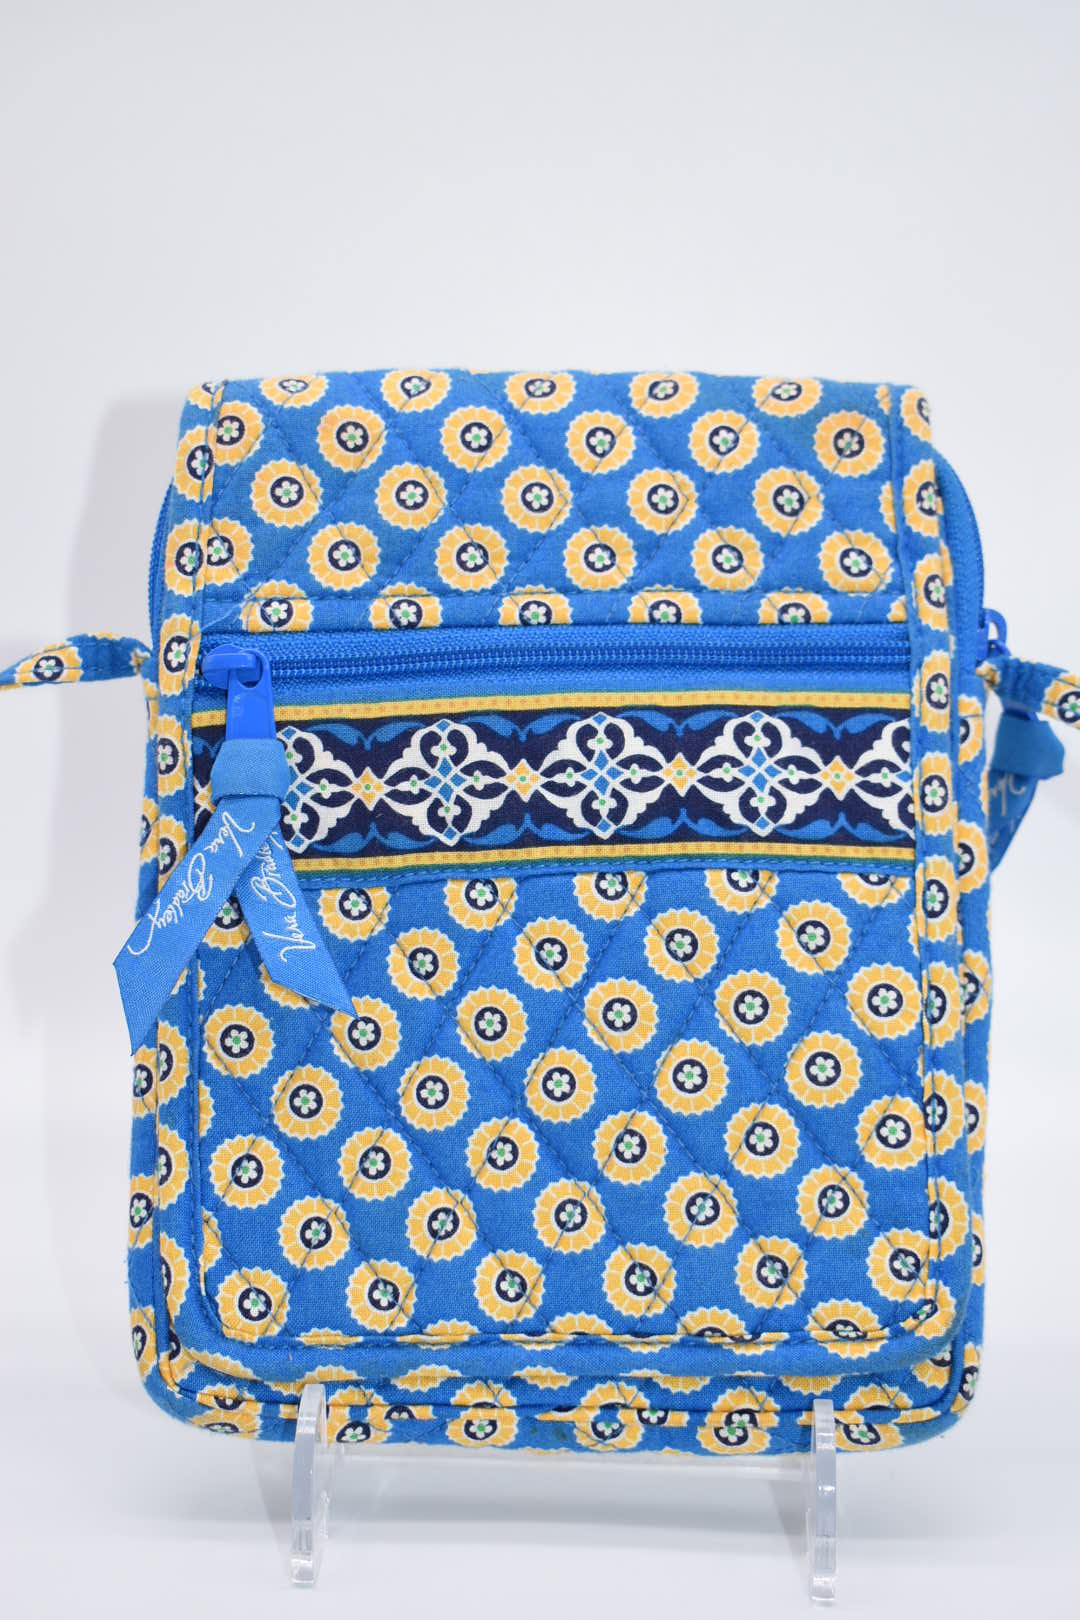 Vera Bradley Mini Hipster Crossbody Bag in "Riviera Blue" Pattern